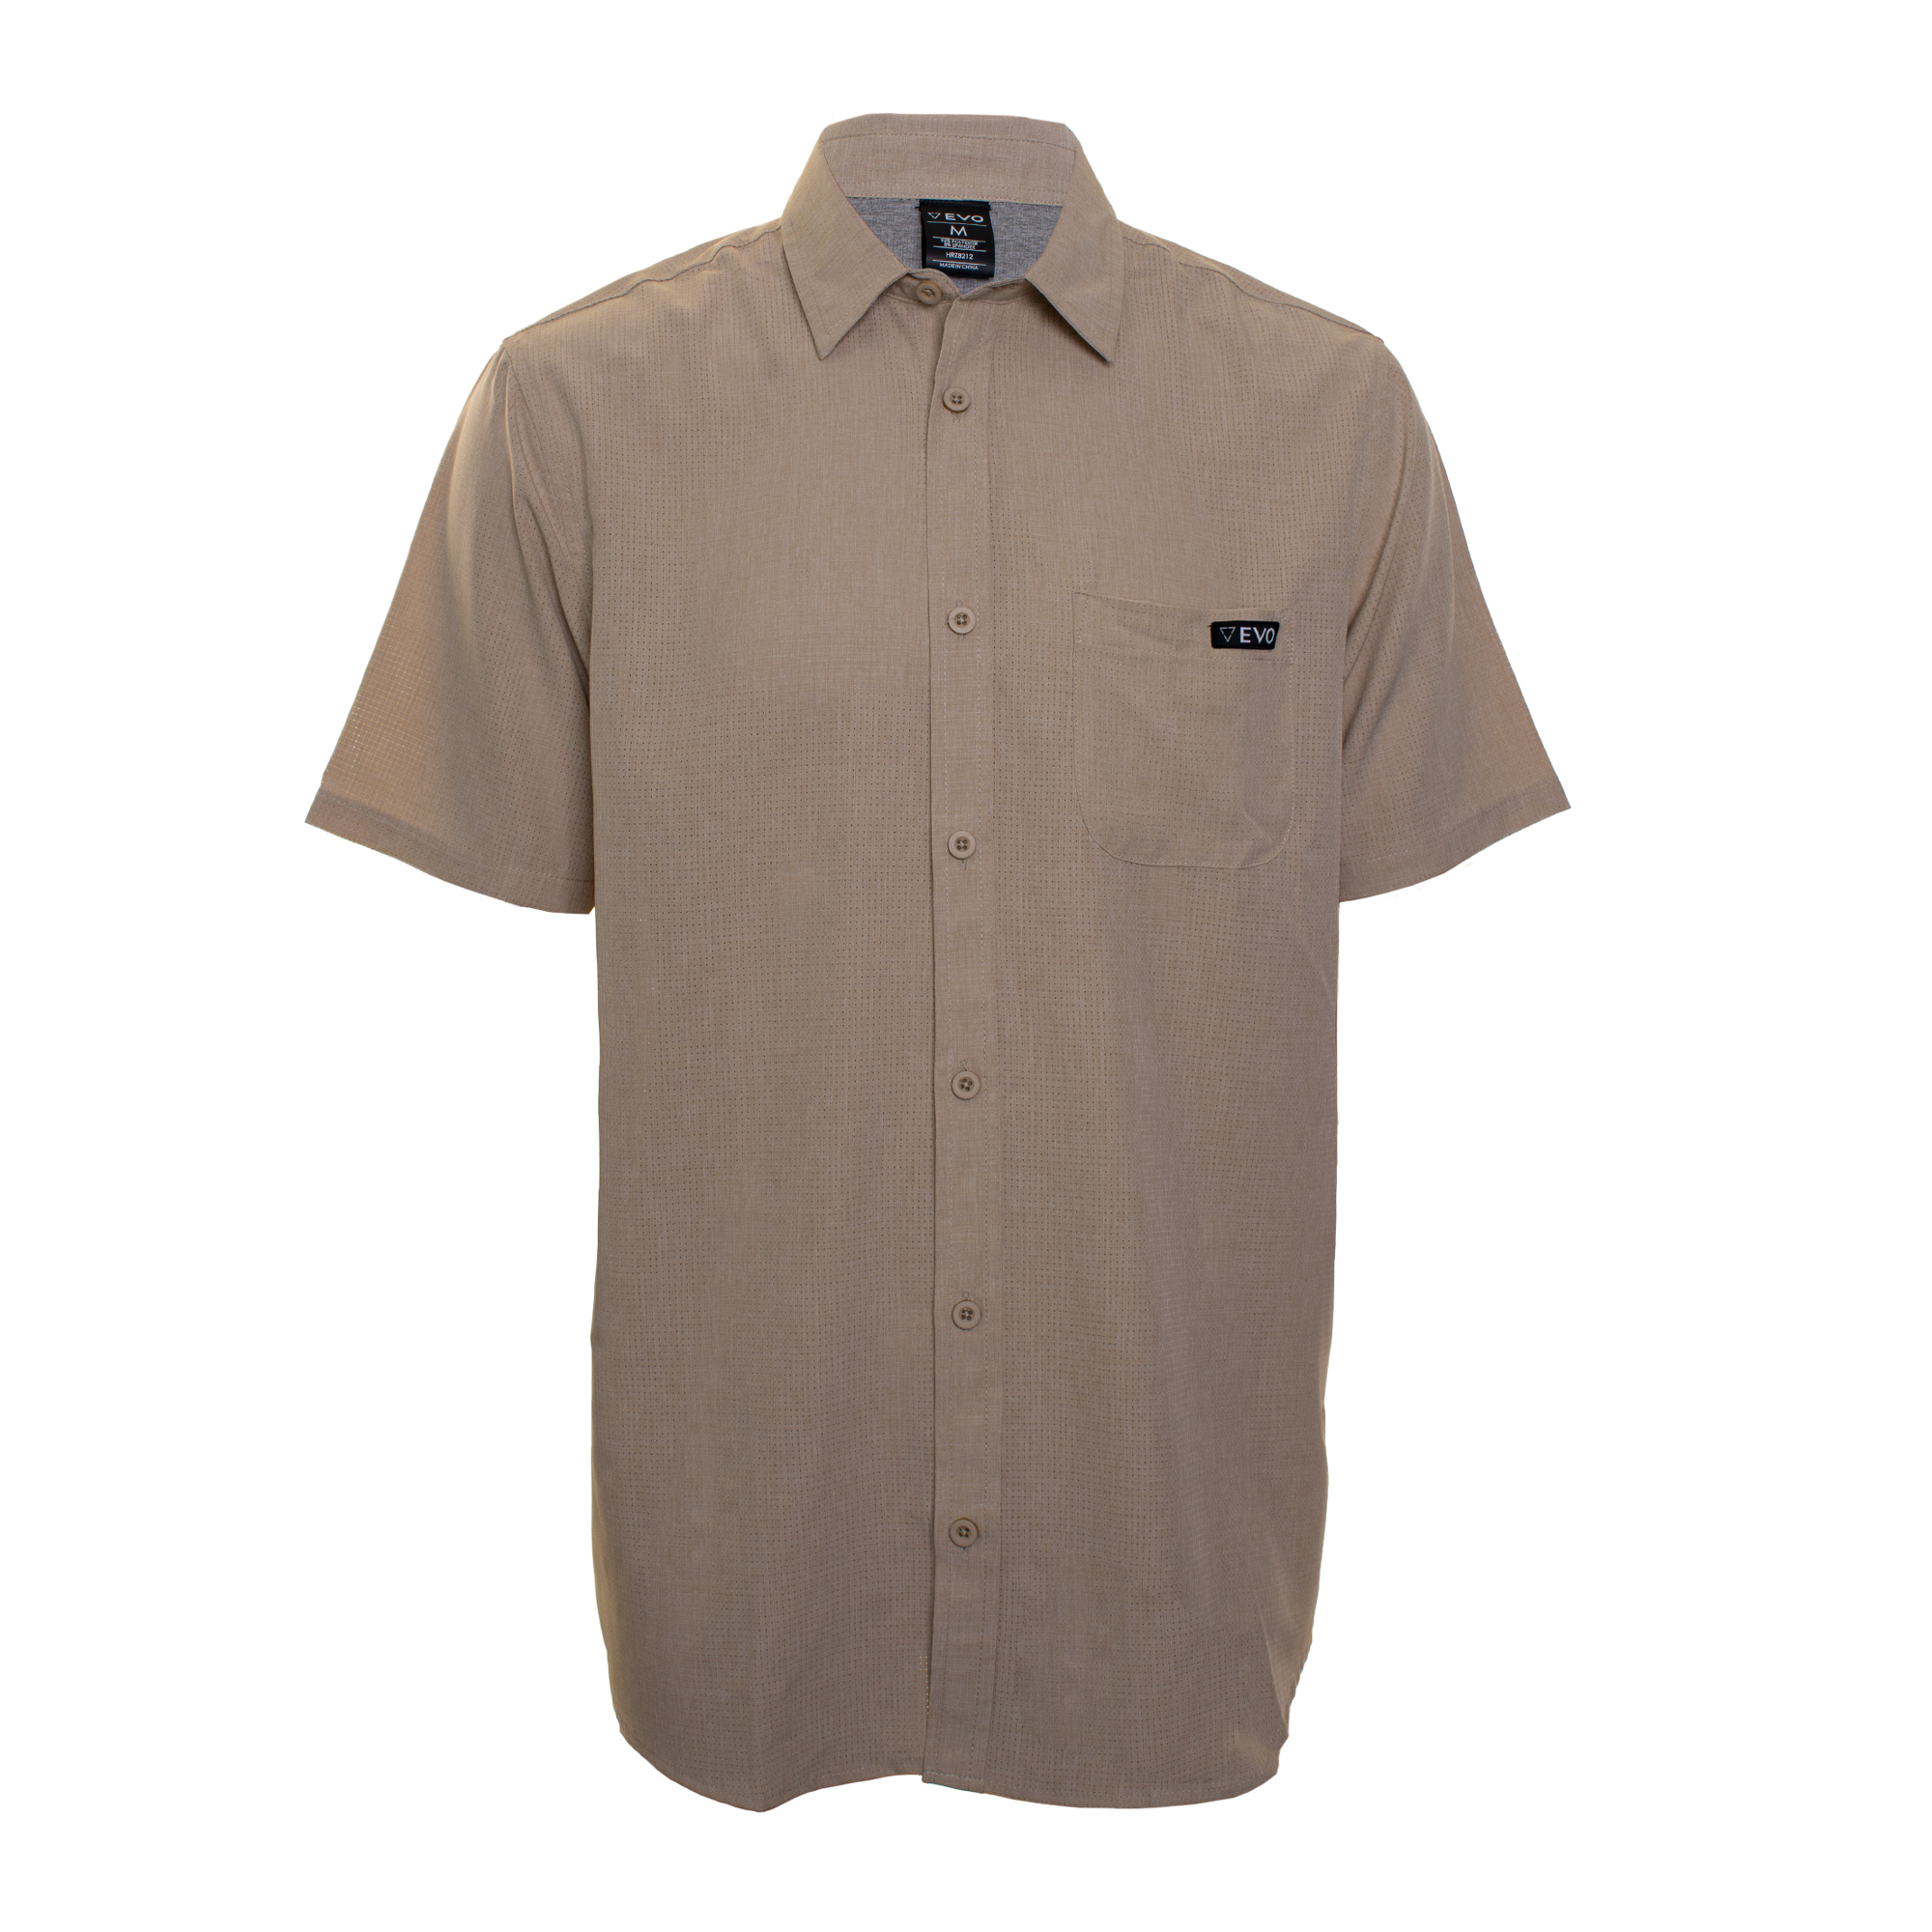 EVO Horizon Woven Short Sleeve Shirt - Stone - front